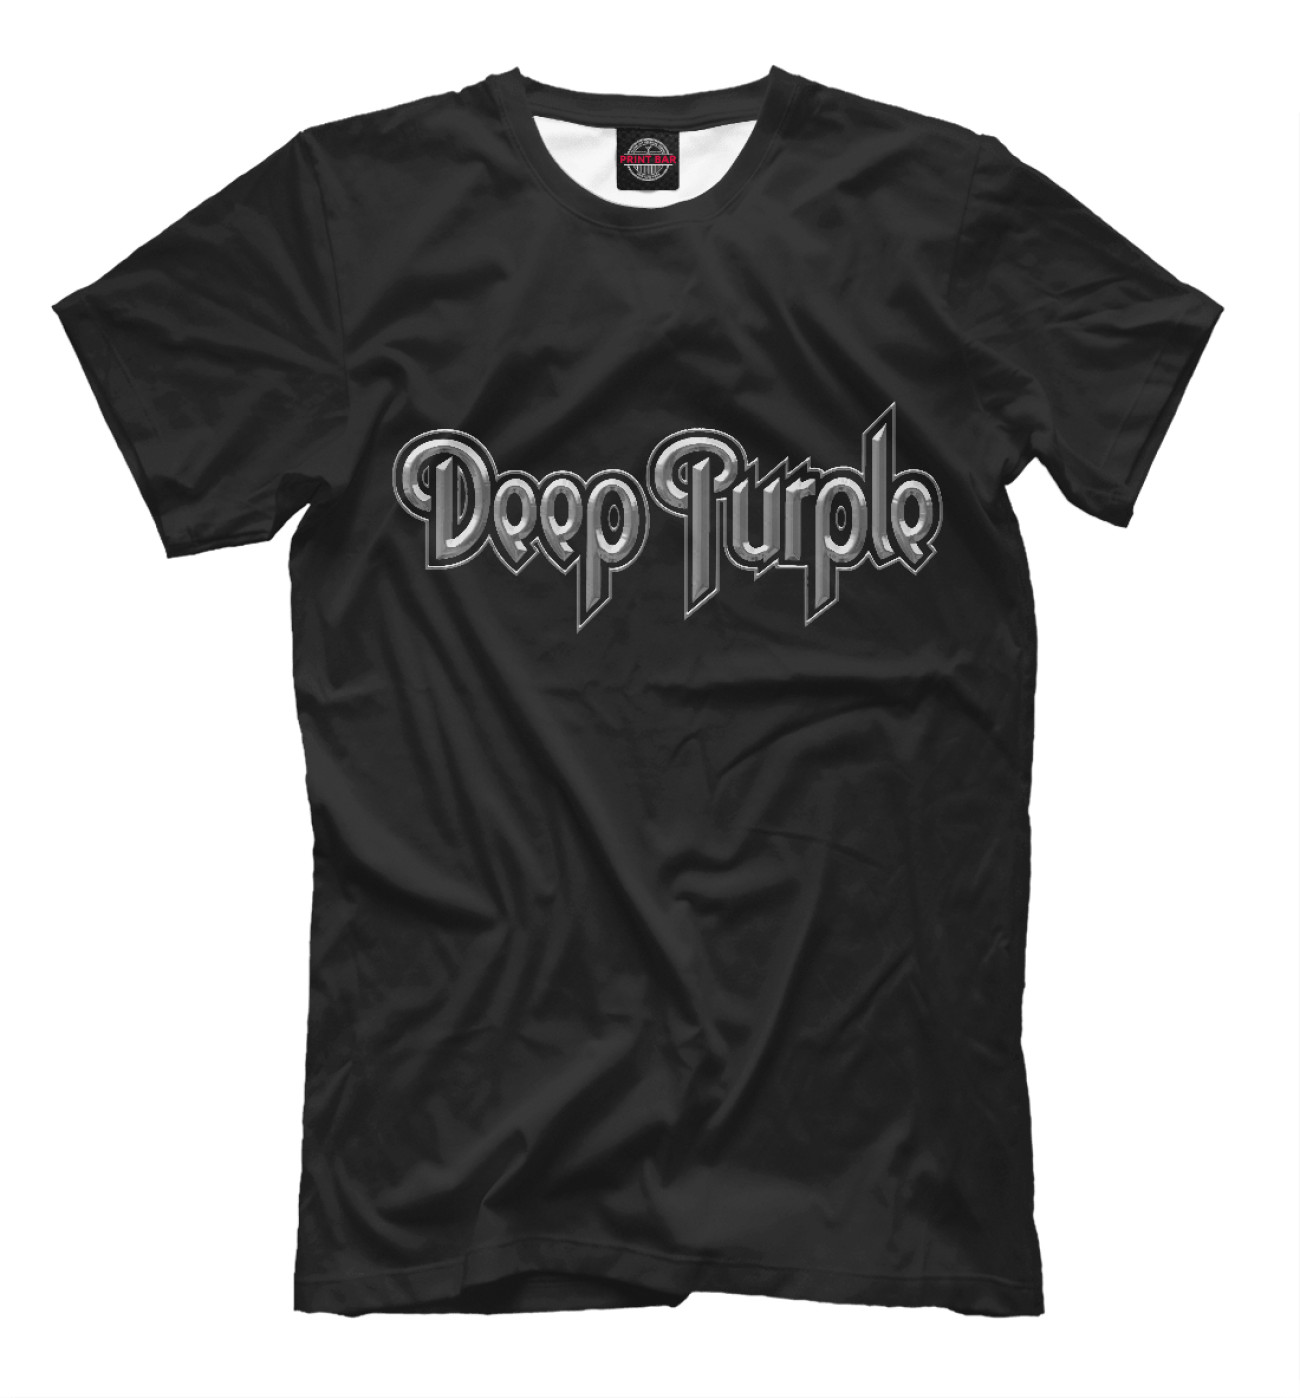 Мужская Футболка Deep Purple, артикул: PUR-323651-fut-2